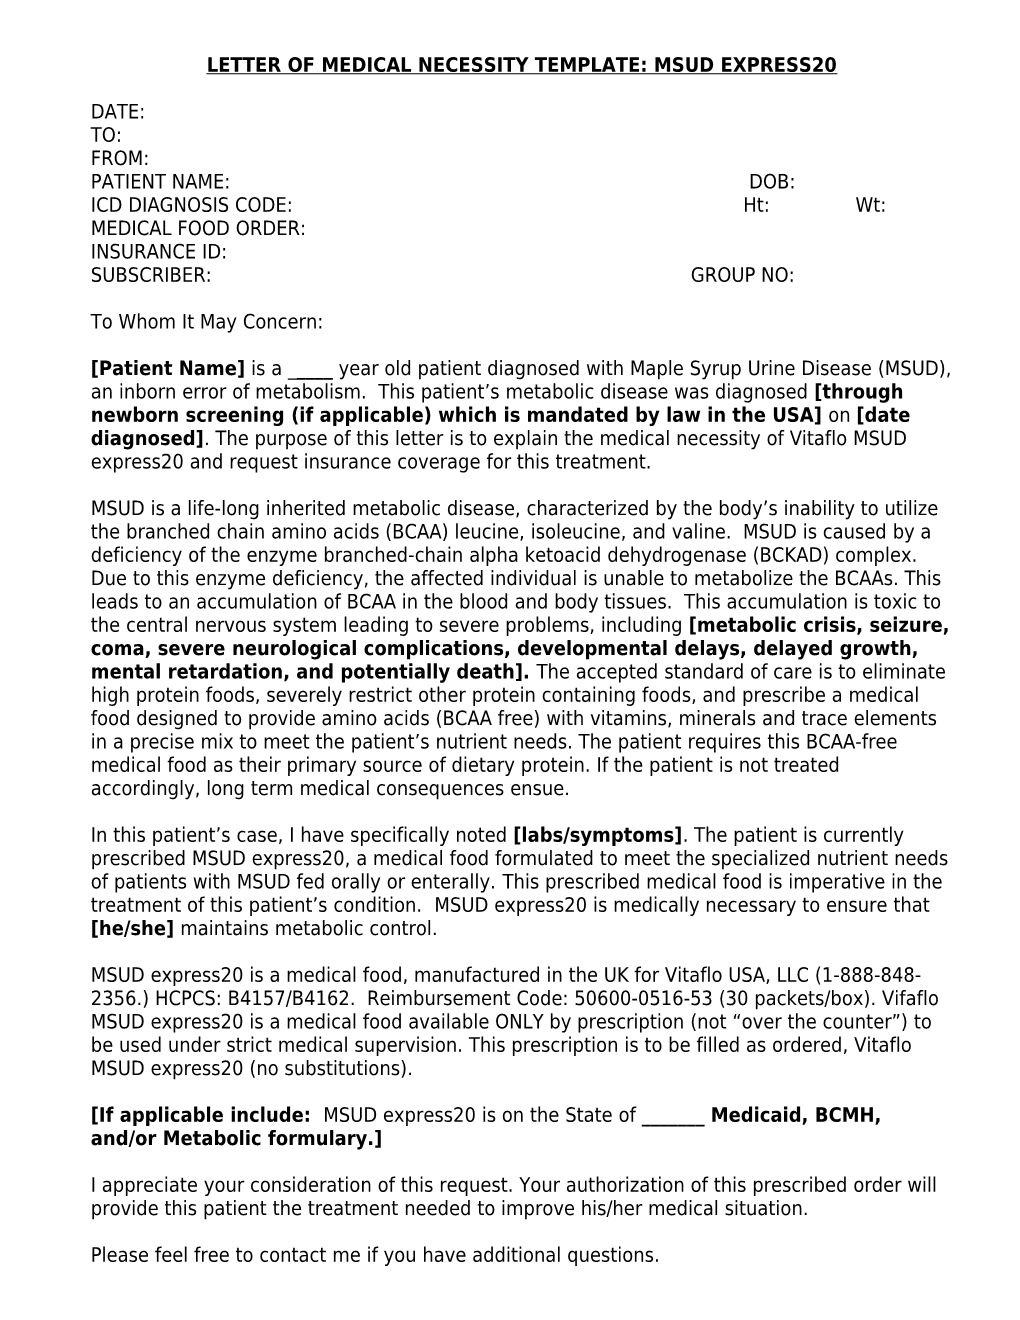 Letter of Medical Necessitytemplate: Msudexpress20